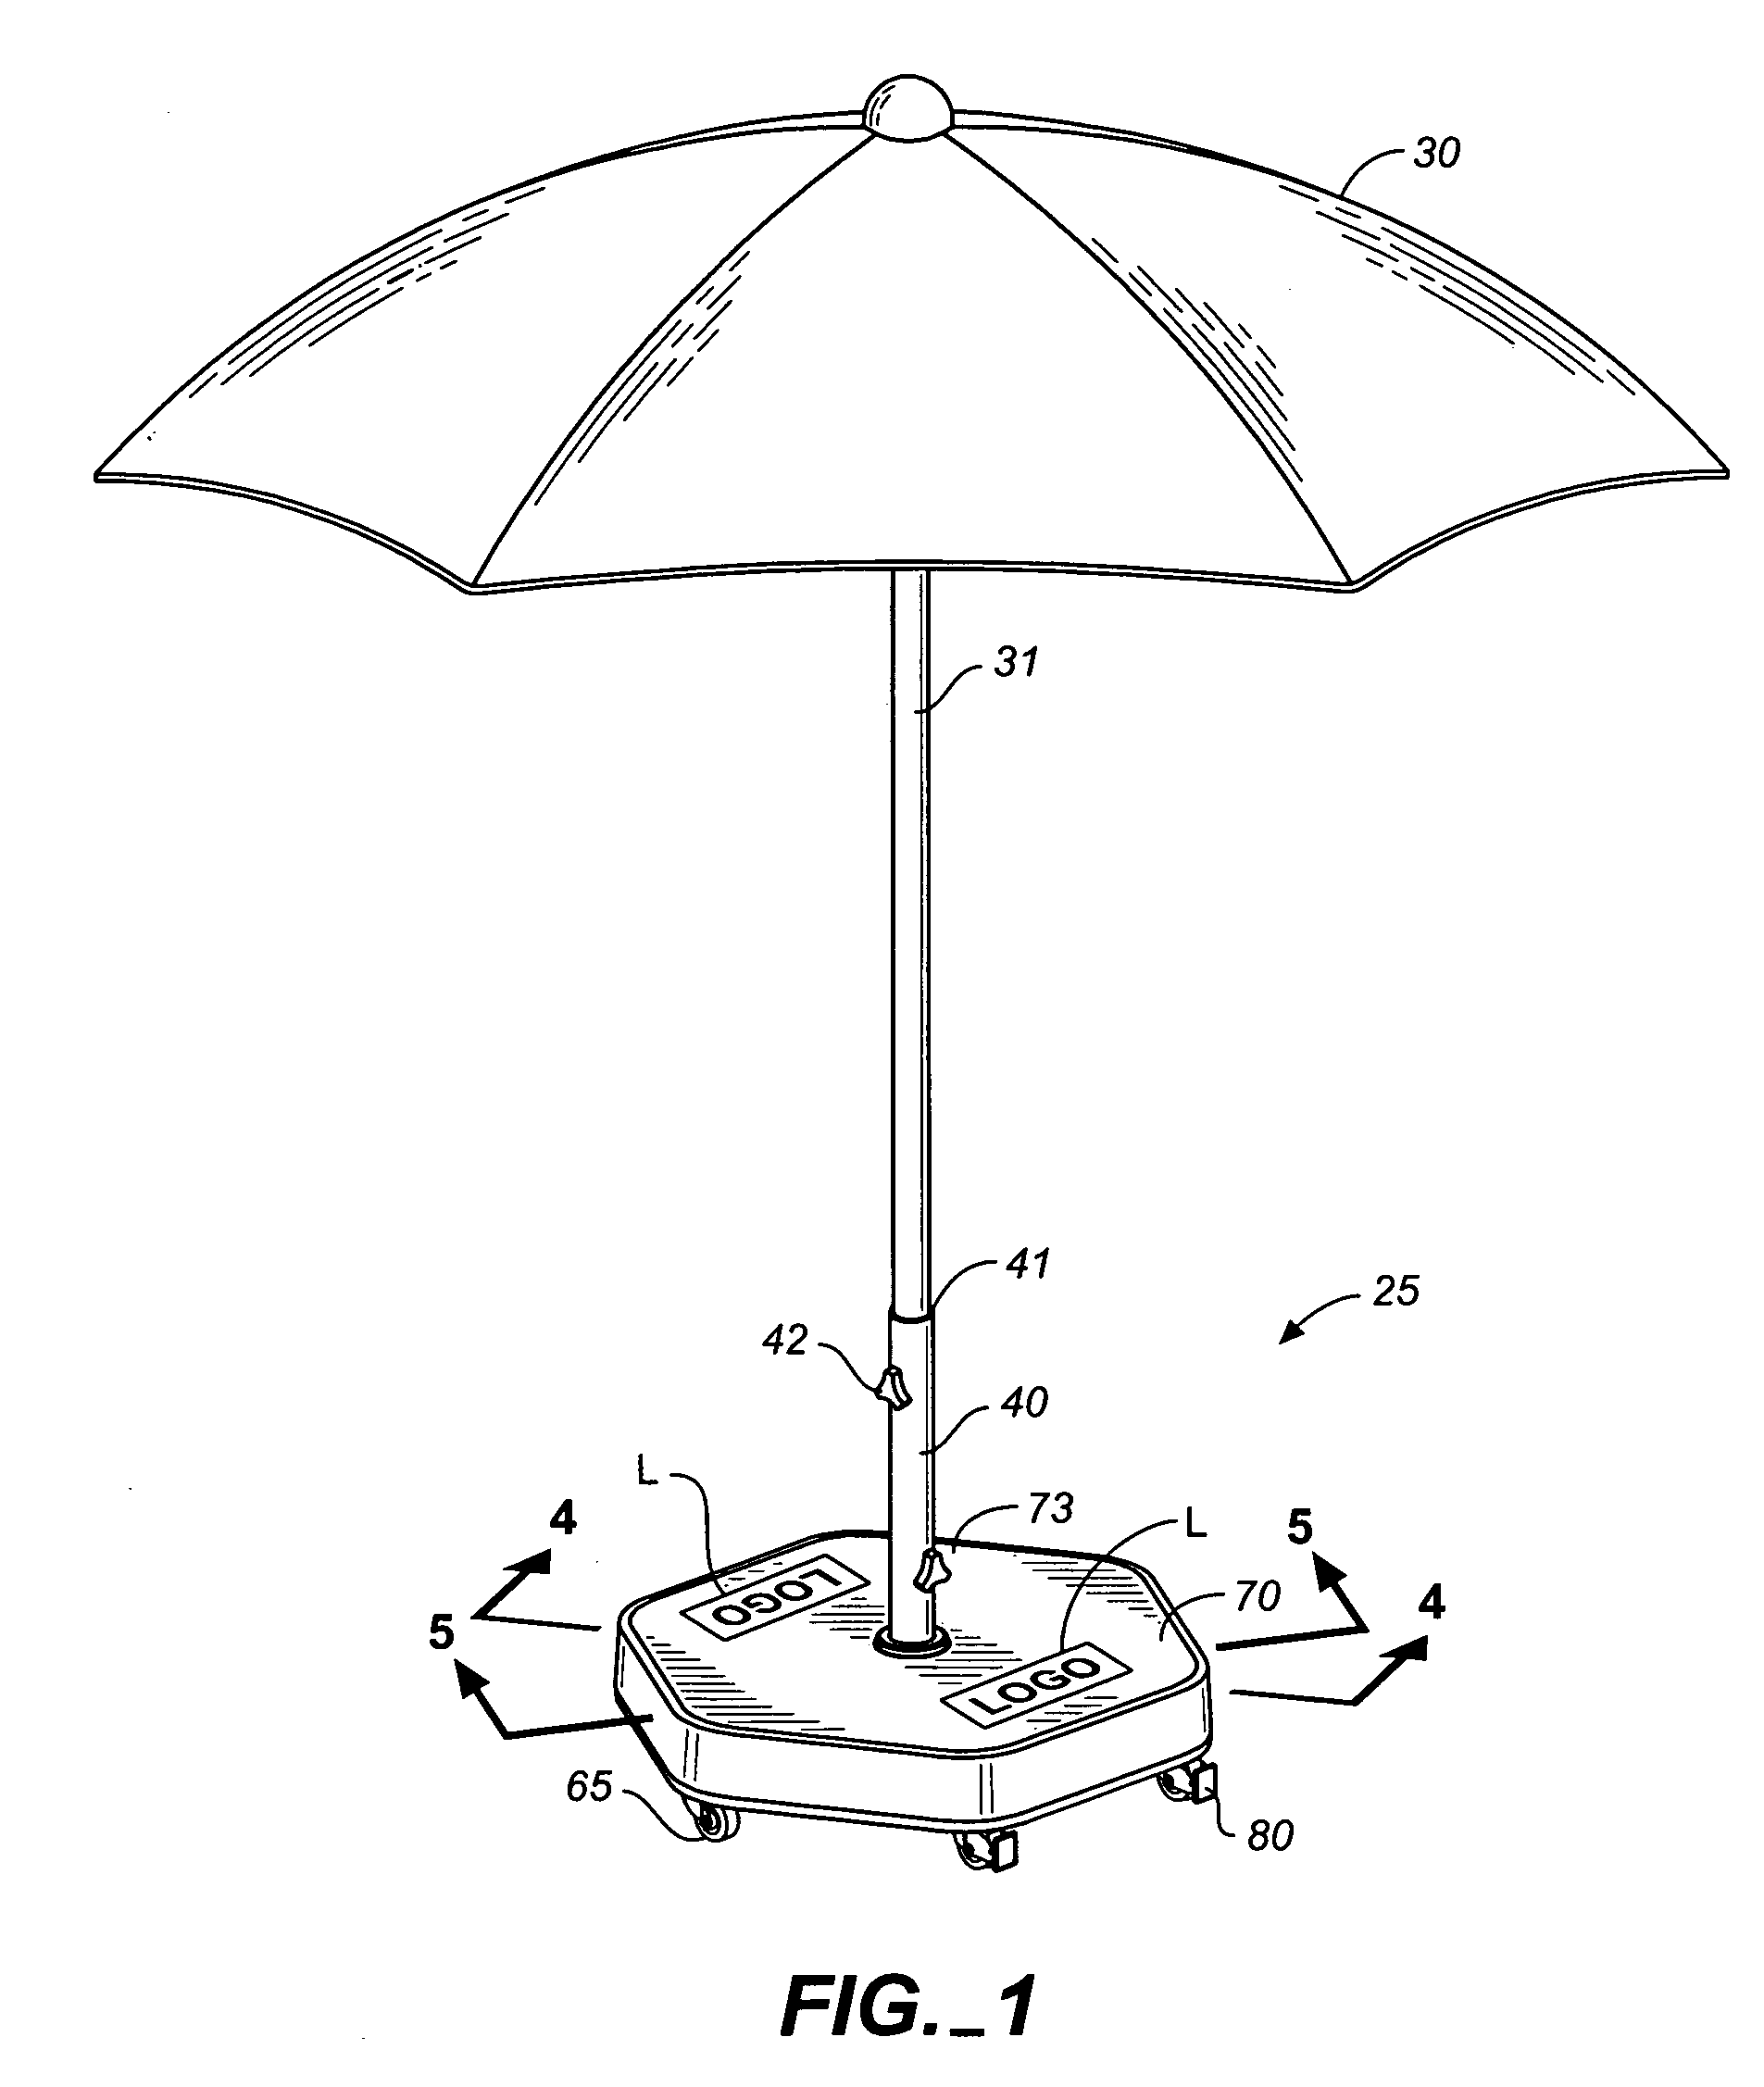 Umbrella base with power supply